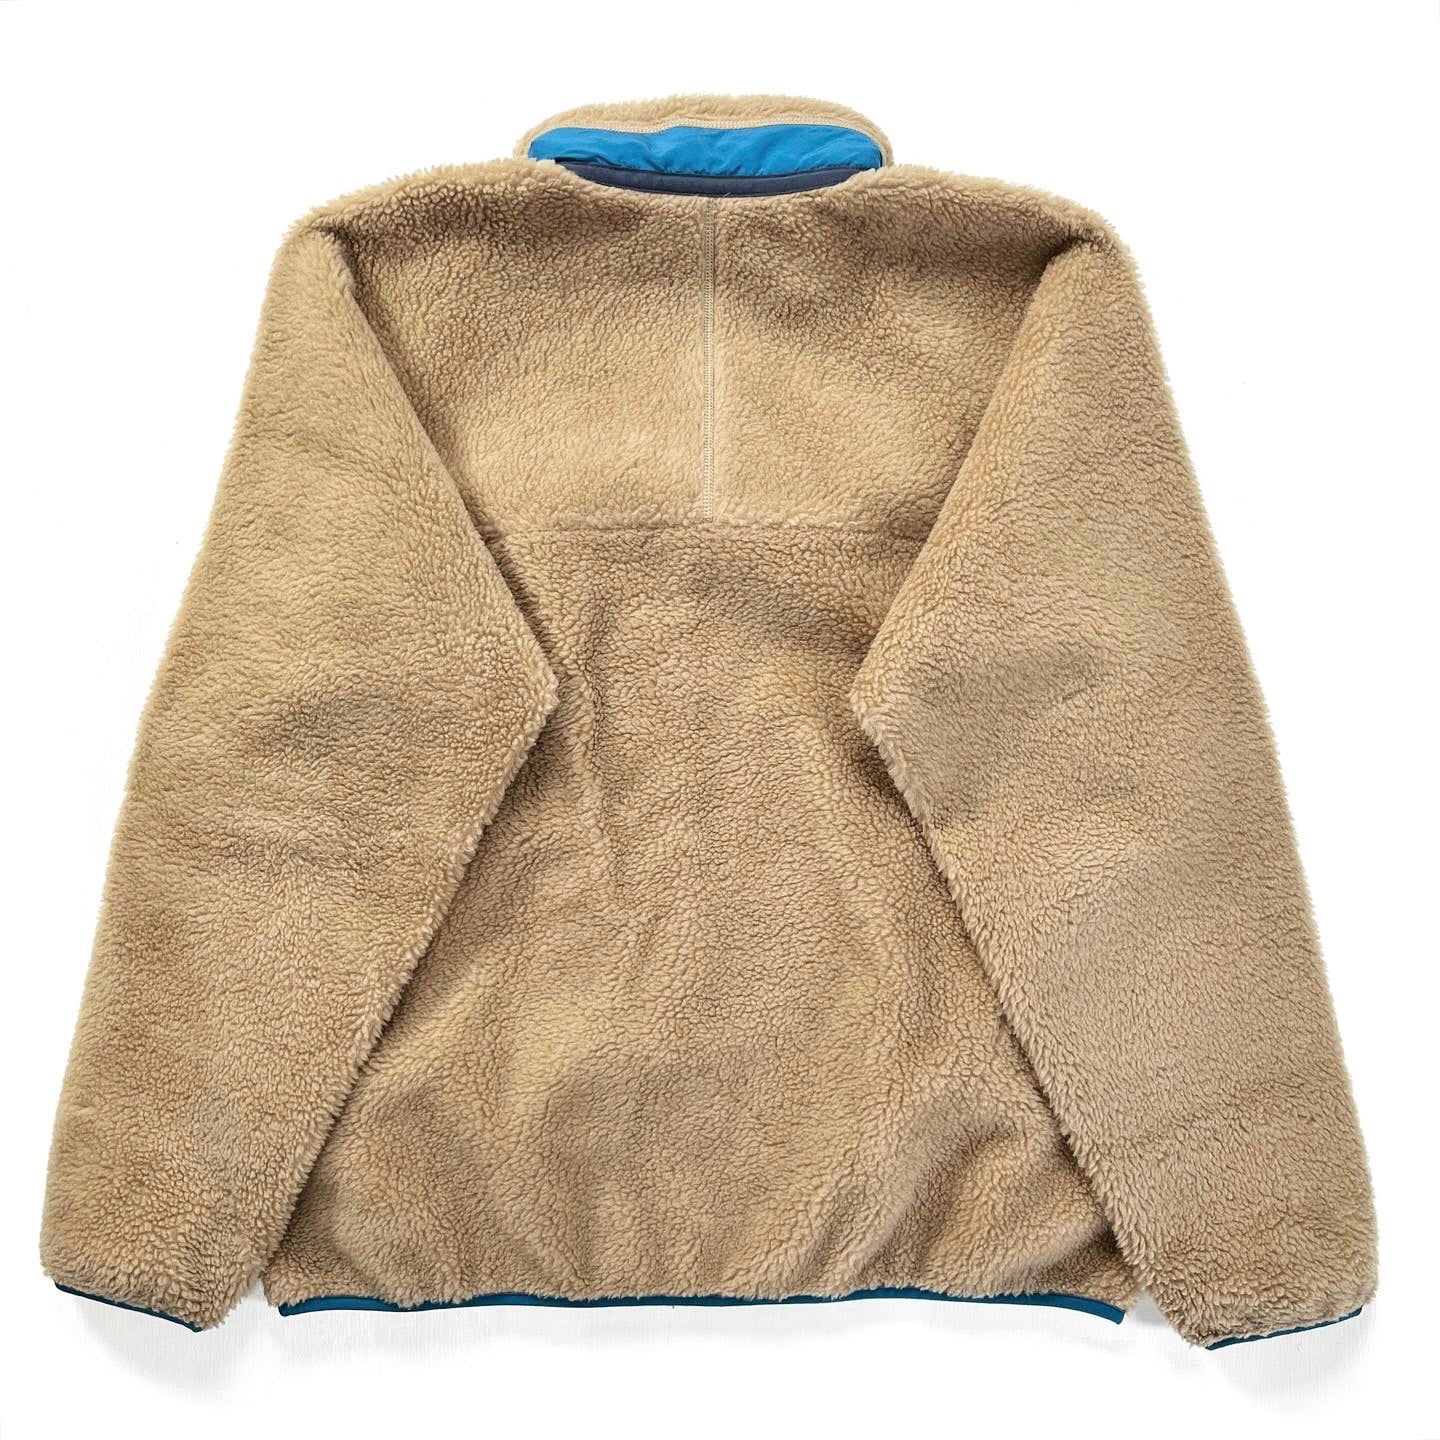 2015 Patagonia Mens Classic Retro-X Jacket, Ash Tan & Blue (L/XL)